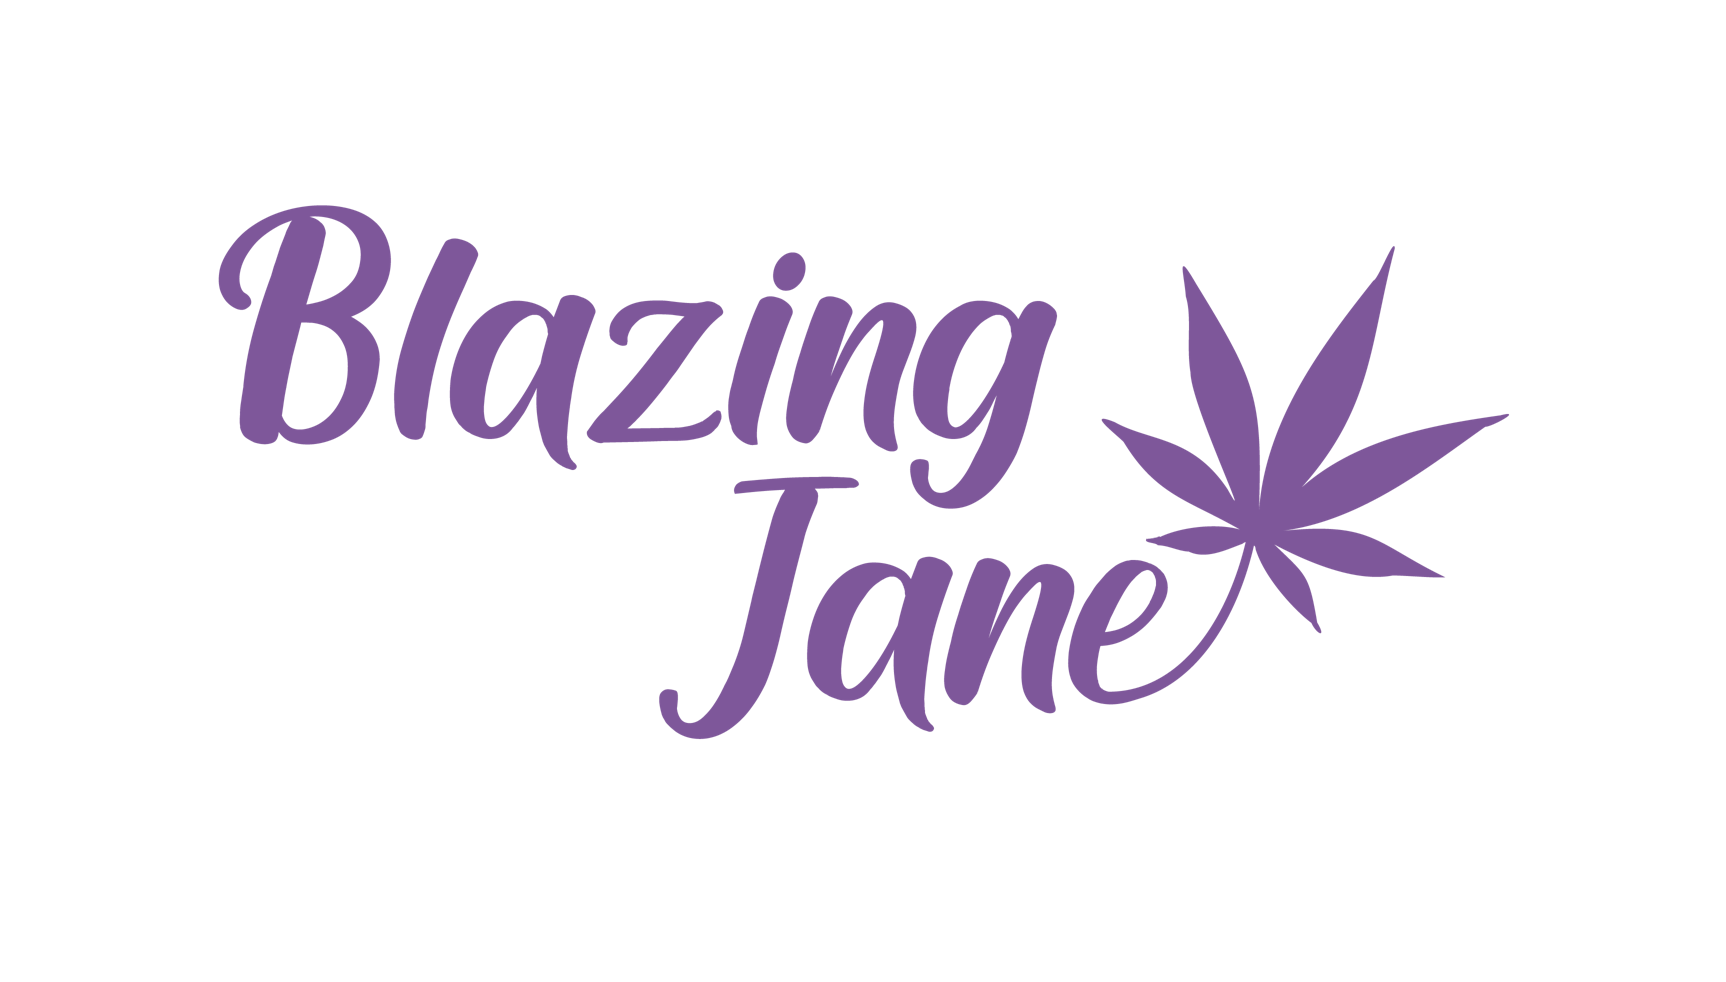 Blazing jane logo 03 2